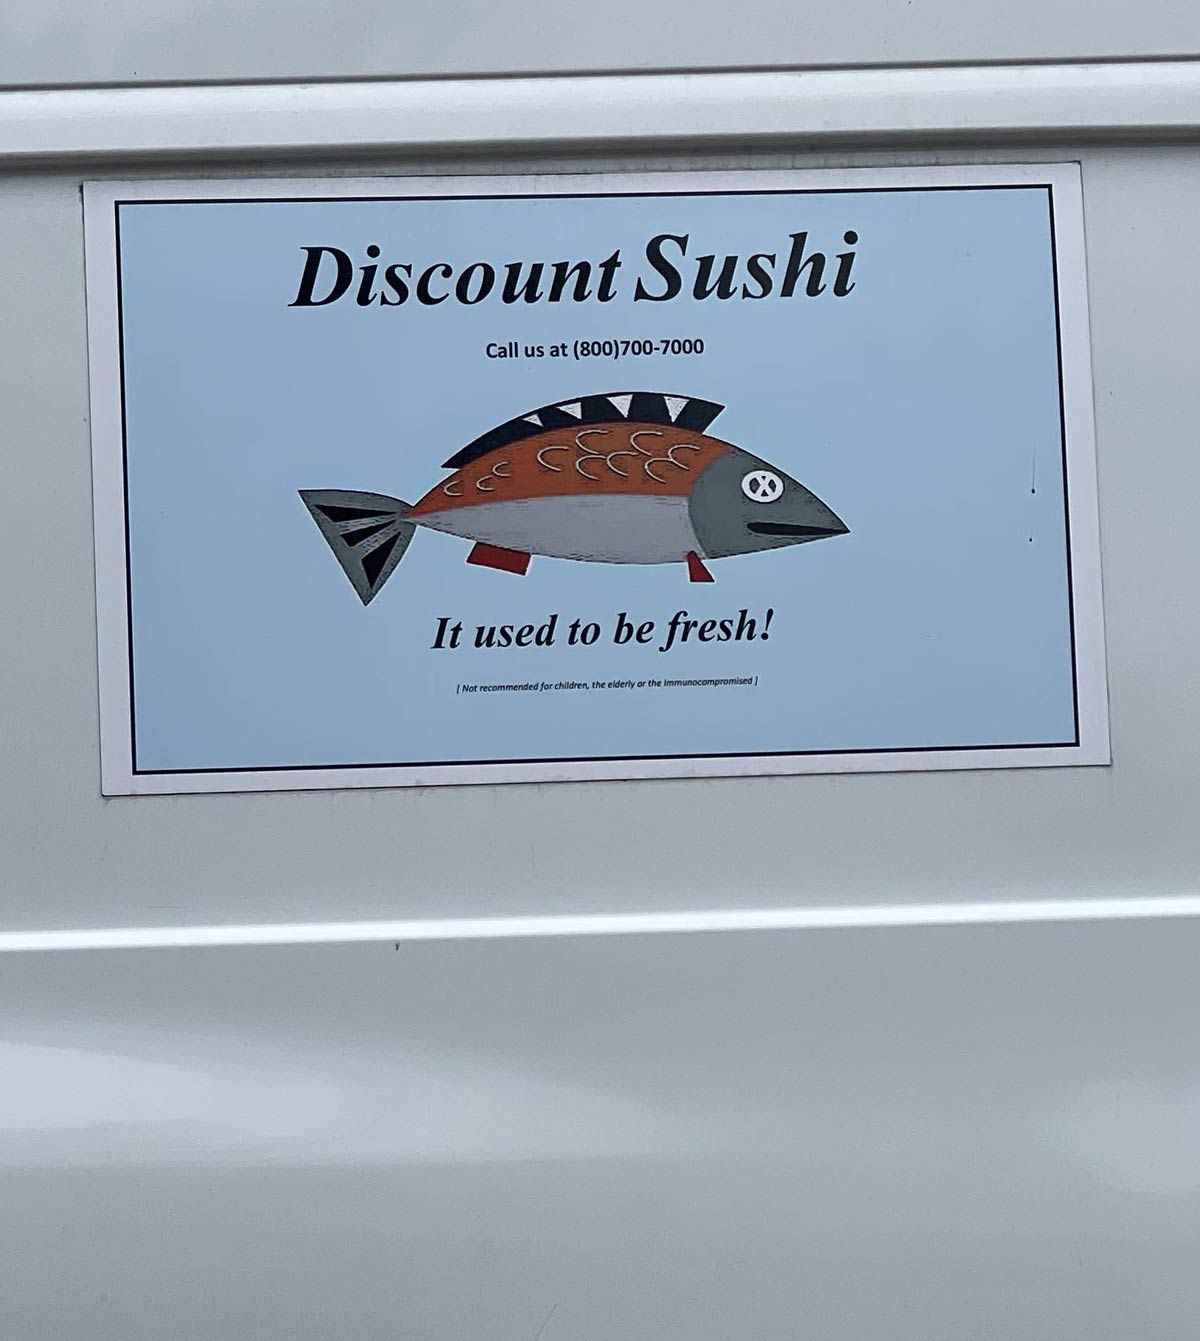 Discount Sushi, my favorite!